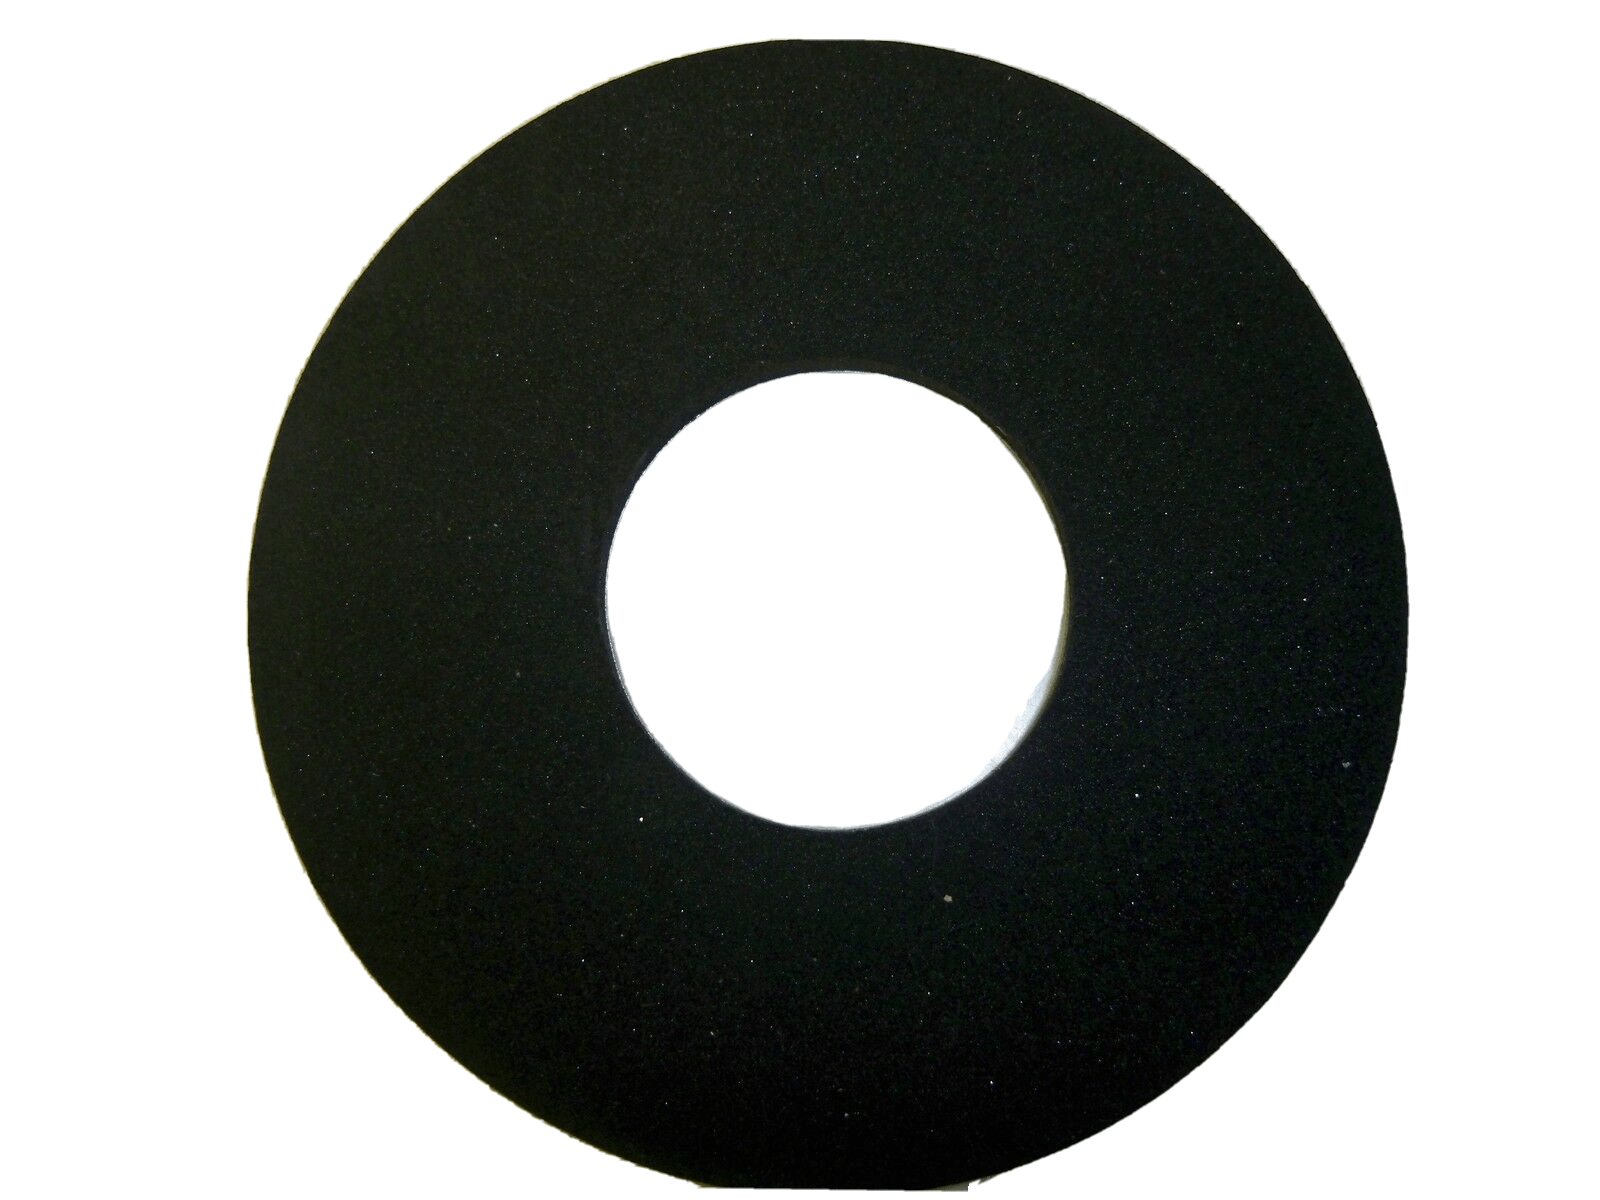 Vacuum cleaner adhesive seal gasket D=127, d=50mm, thickness 3mm Микроволновые печи, пылесосы, утюги, вытяжки и другие мелкие детали техники